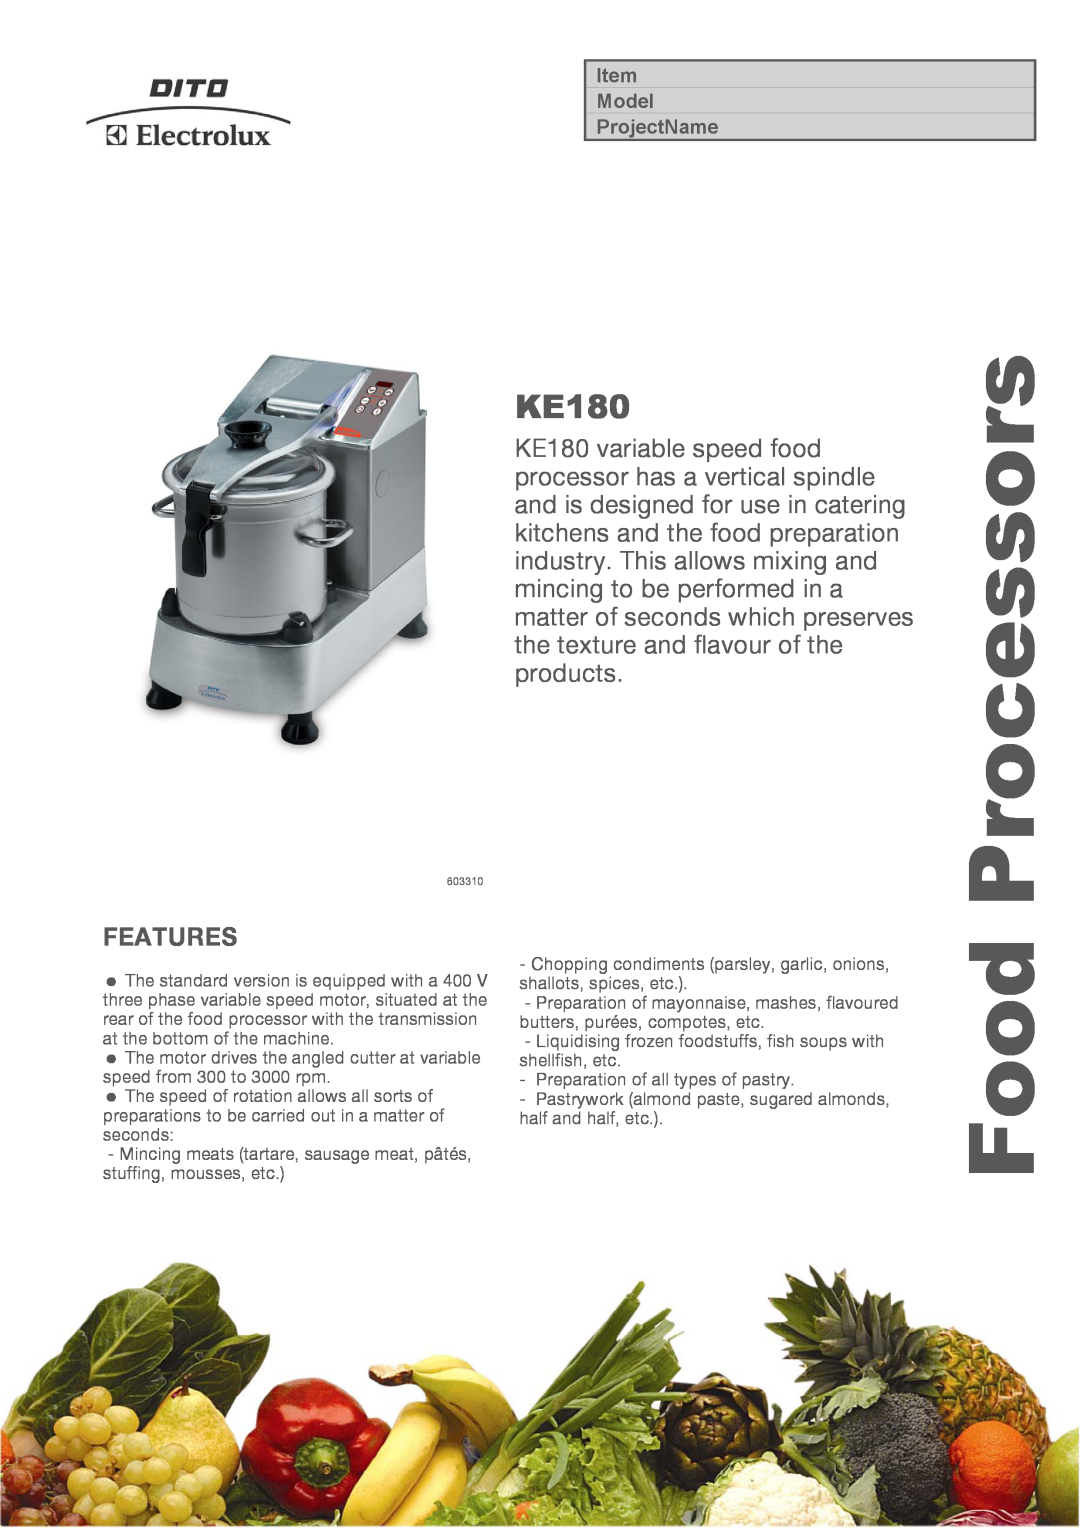 Electrolux KE180F, 603310 manual Features, Processors, Food, Model ProjectName 